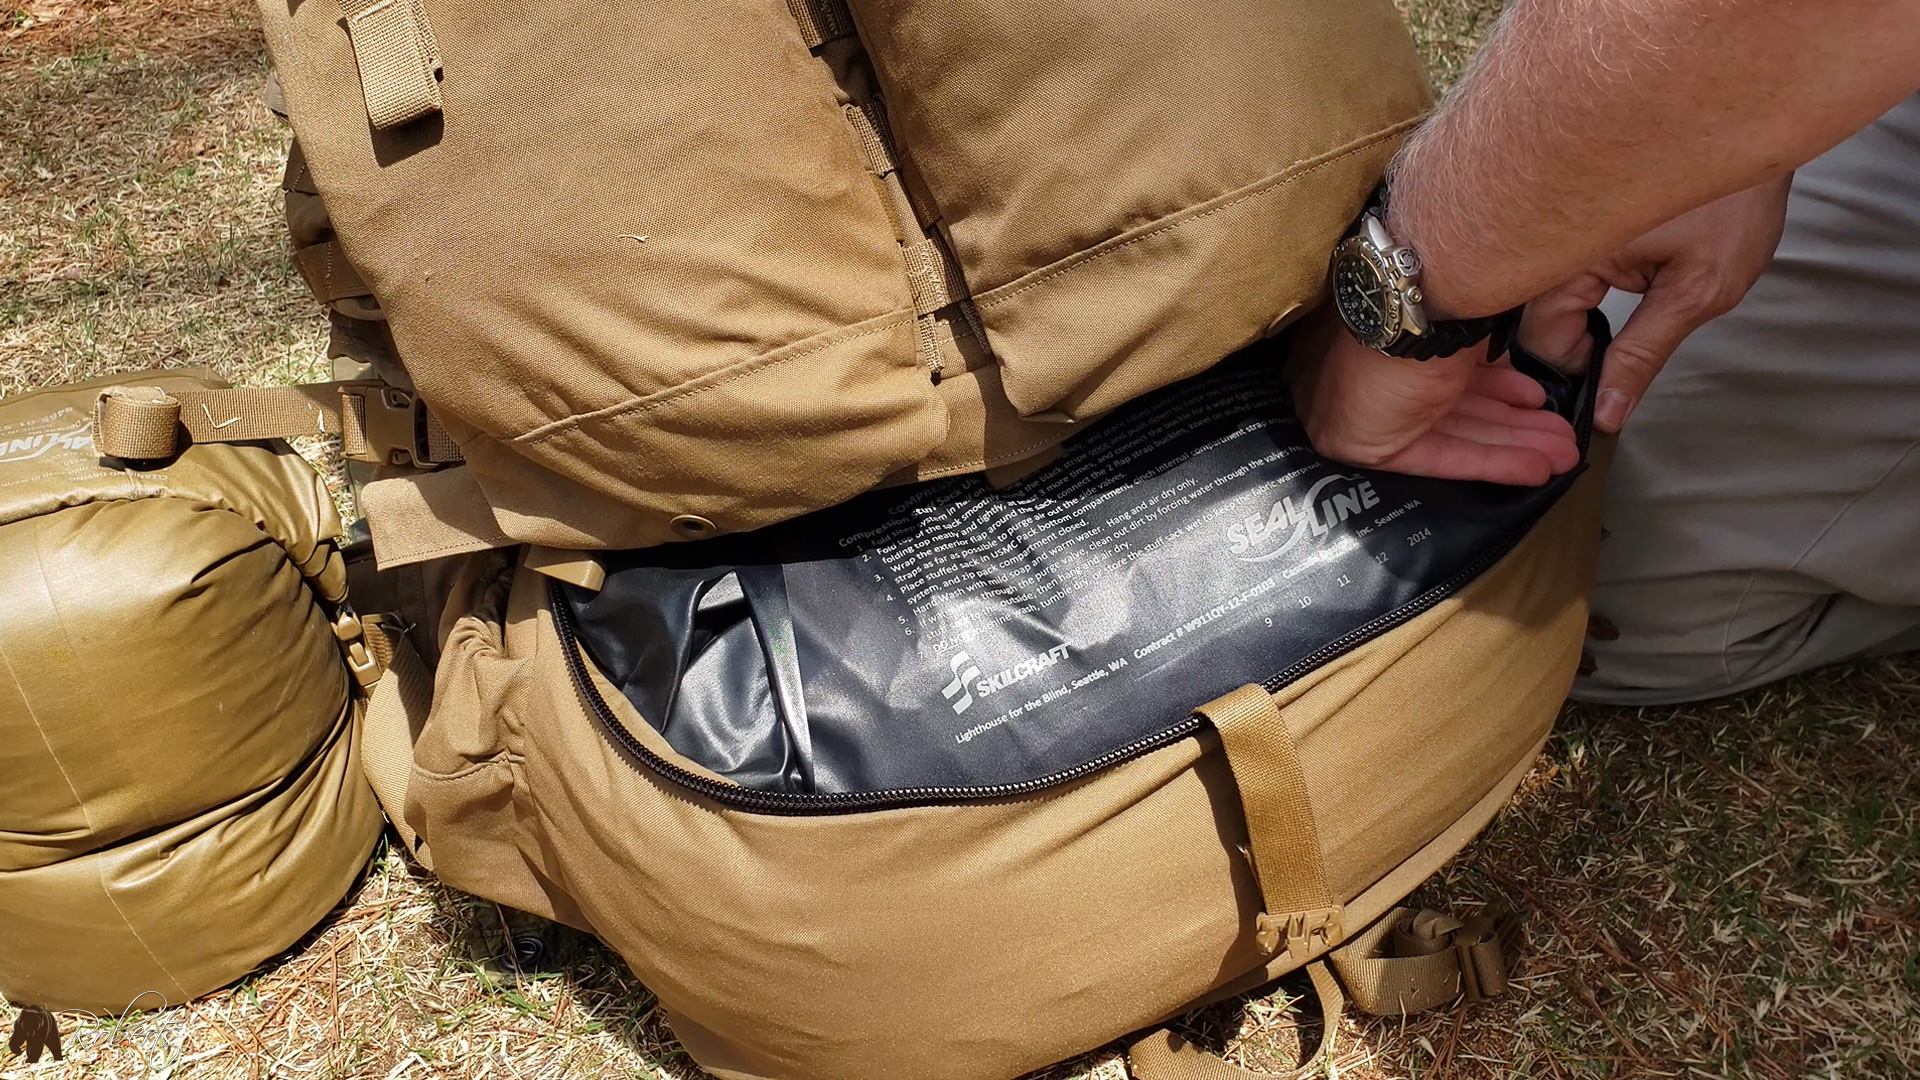 Sleeping Bag Compression Stuff Sack Bag Pack Camping USA Made Army Military NIB